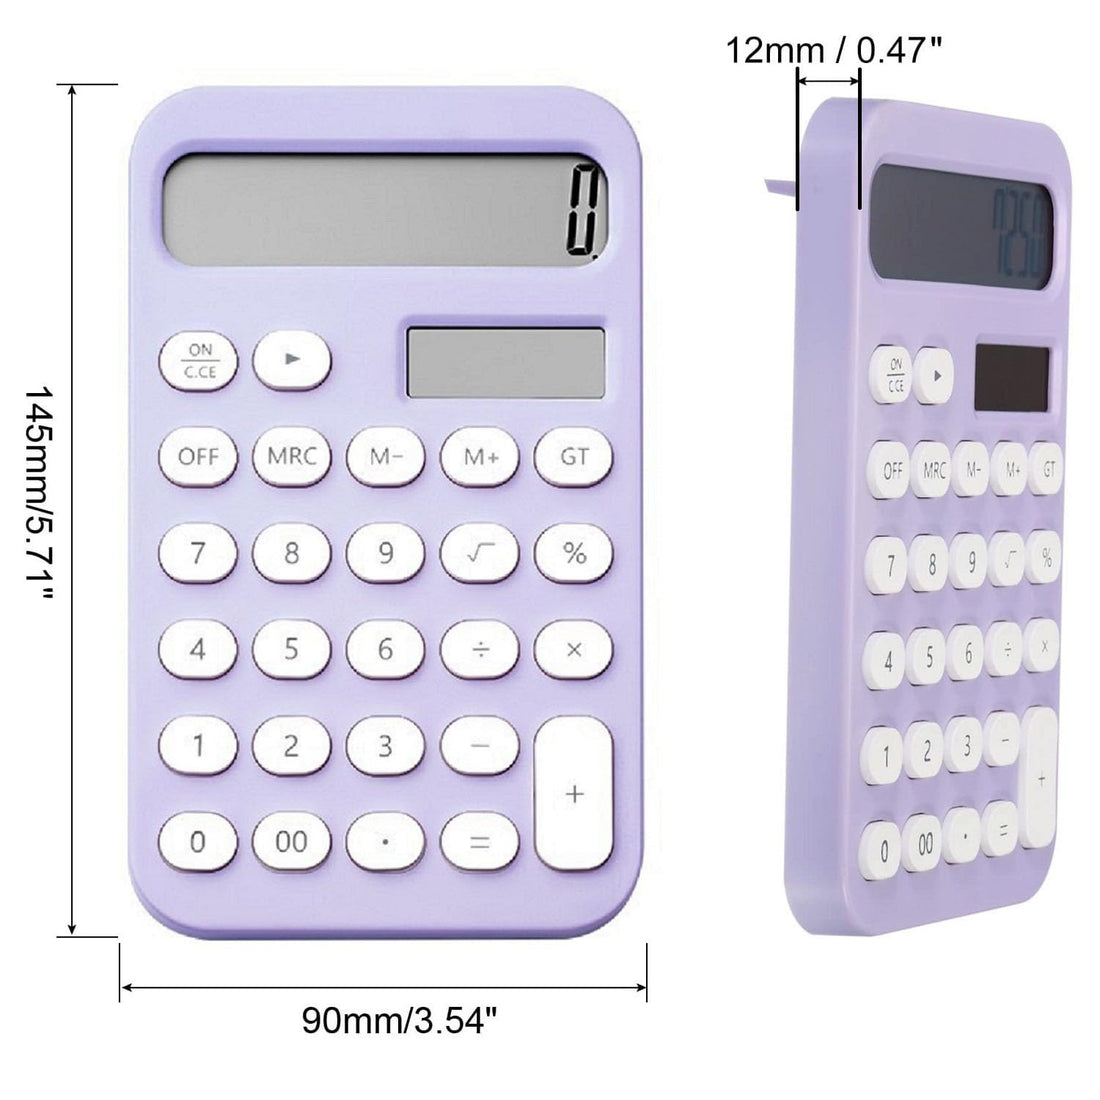 Basic Desk Calculator, Cute Pocket Calculators Desktop, 12 Digit Desktop Calculator with Large LCD Display for Office Home and School (Purple)